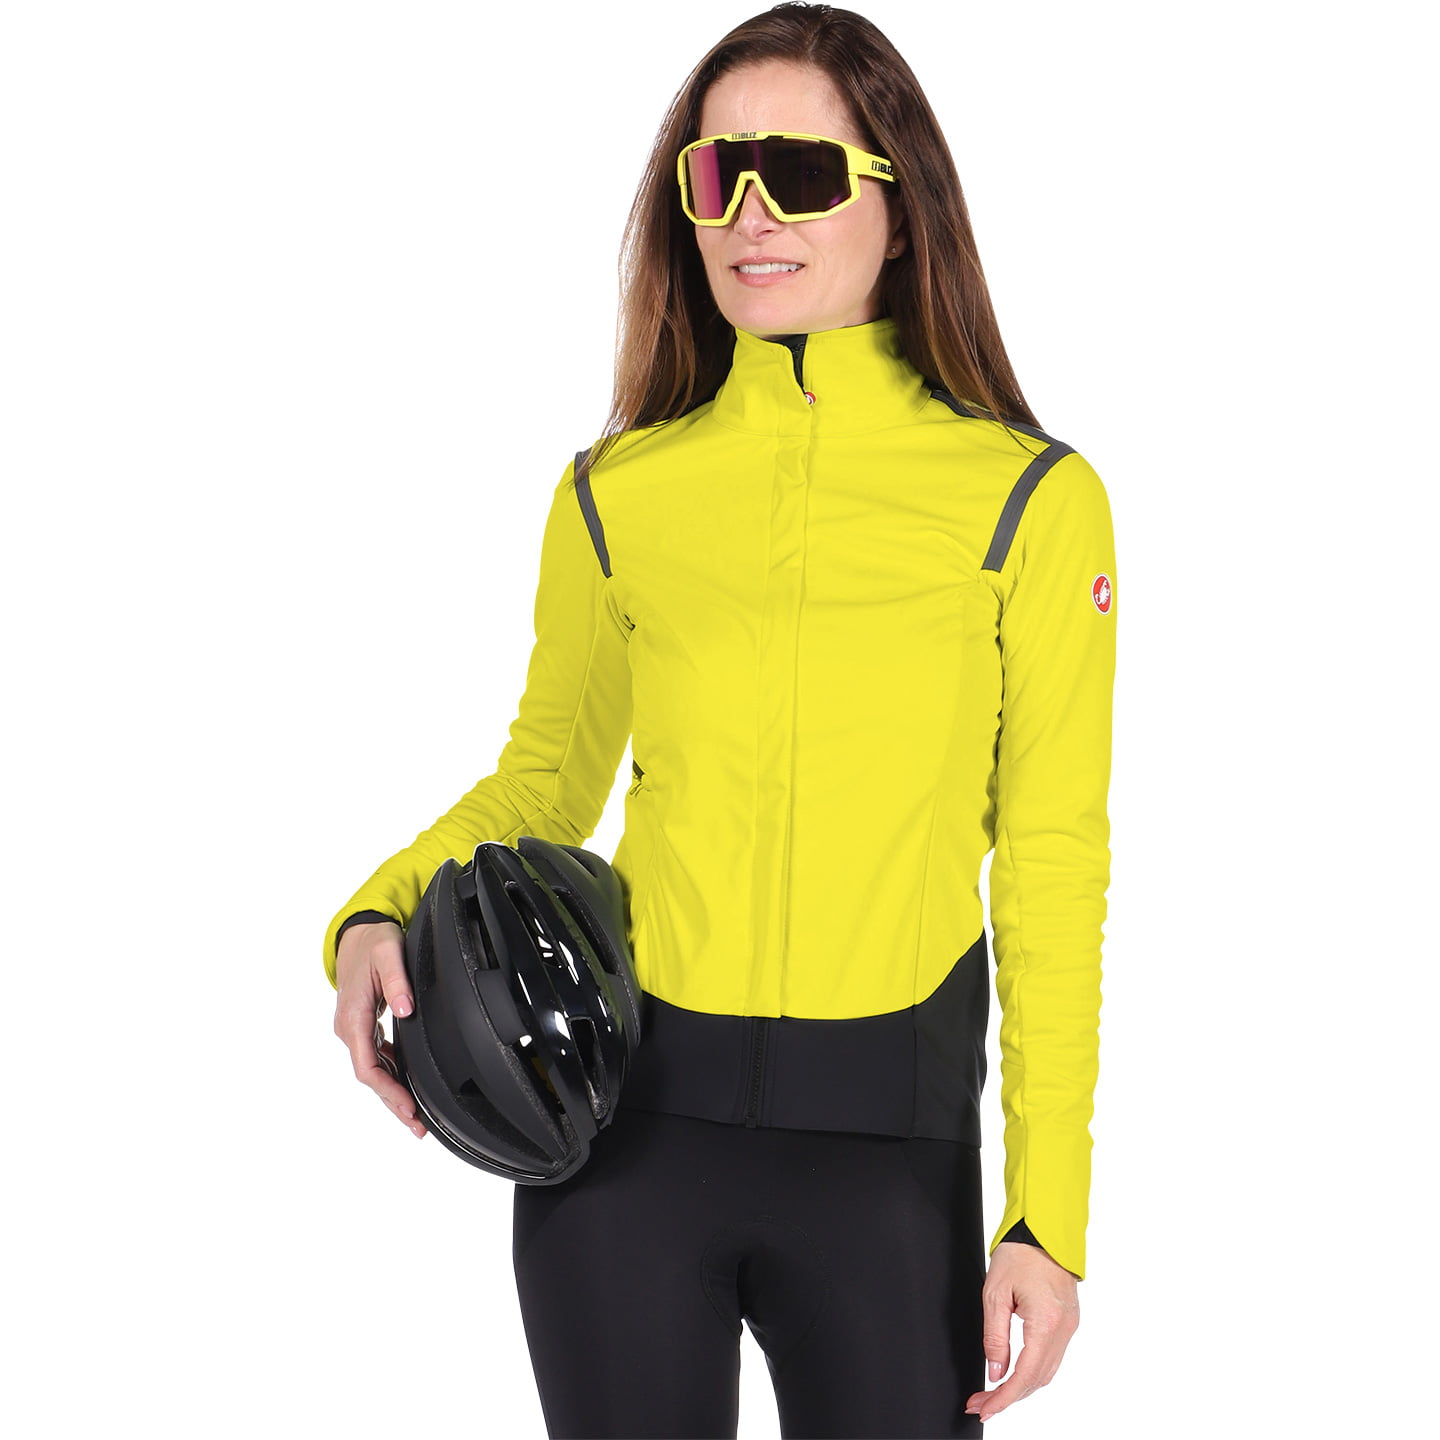 CASTELLI Alpha RoS 2 Women’s Winter Jacket Women’s Thermal Jacket, size XL, Winter jacket, Cycling clothes